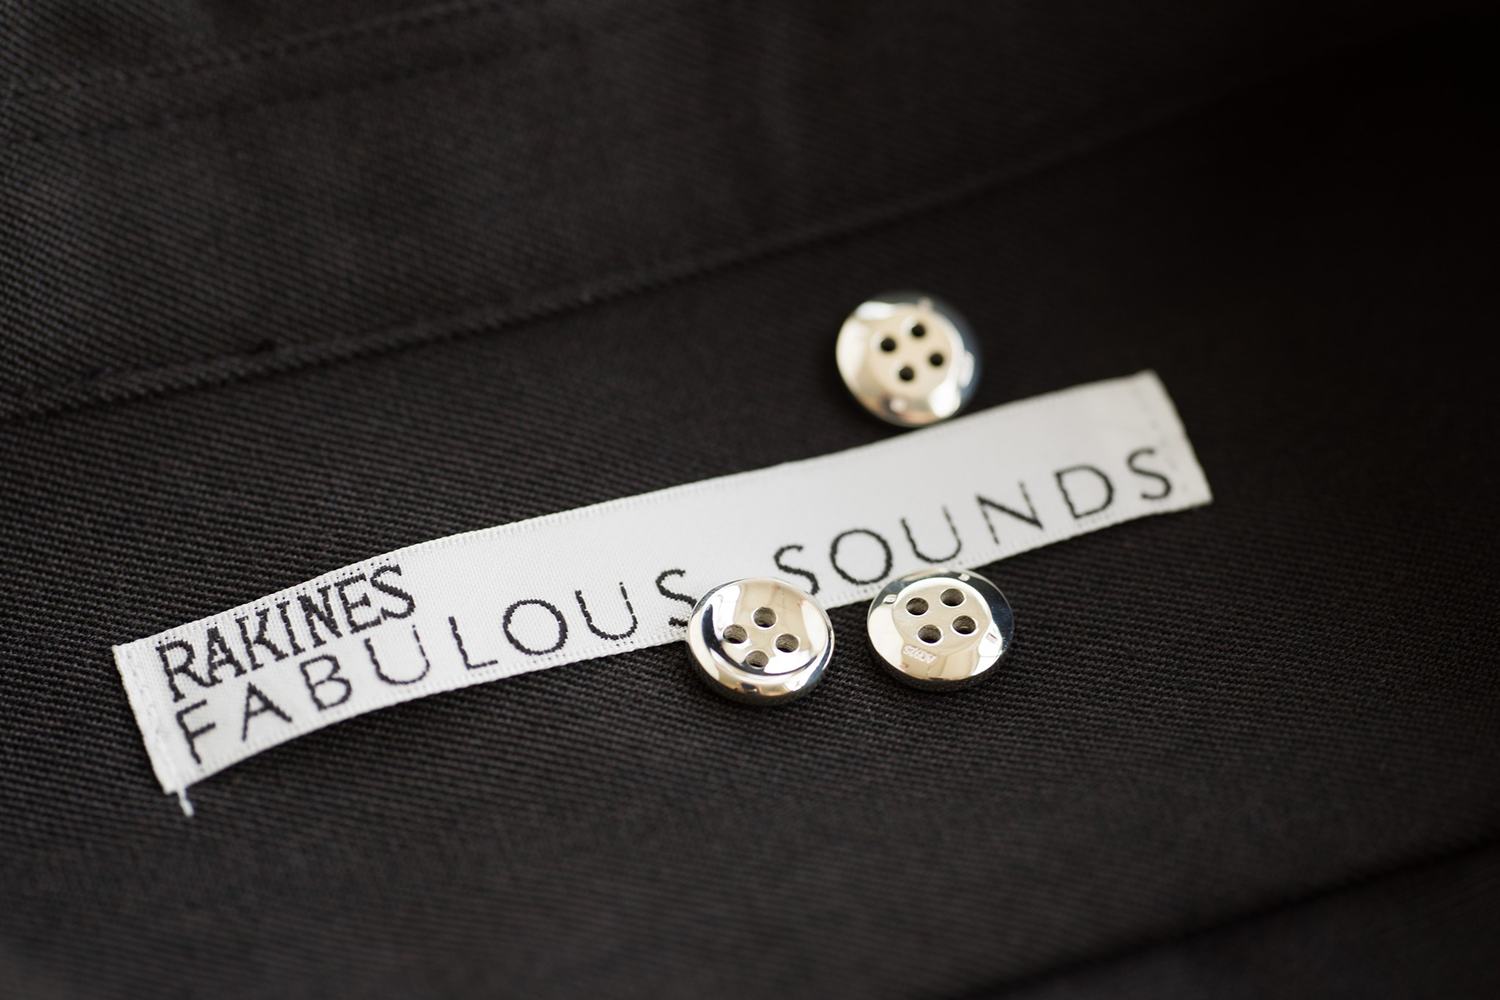 RAKINESがFabulous Soundsのユニフォームを製作